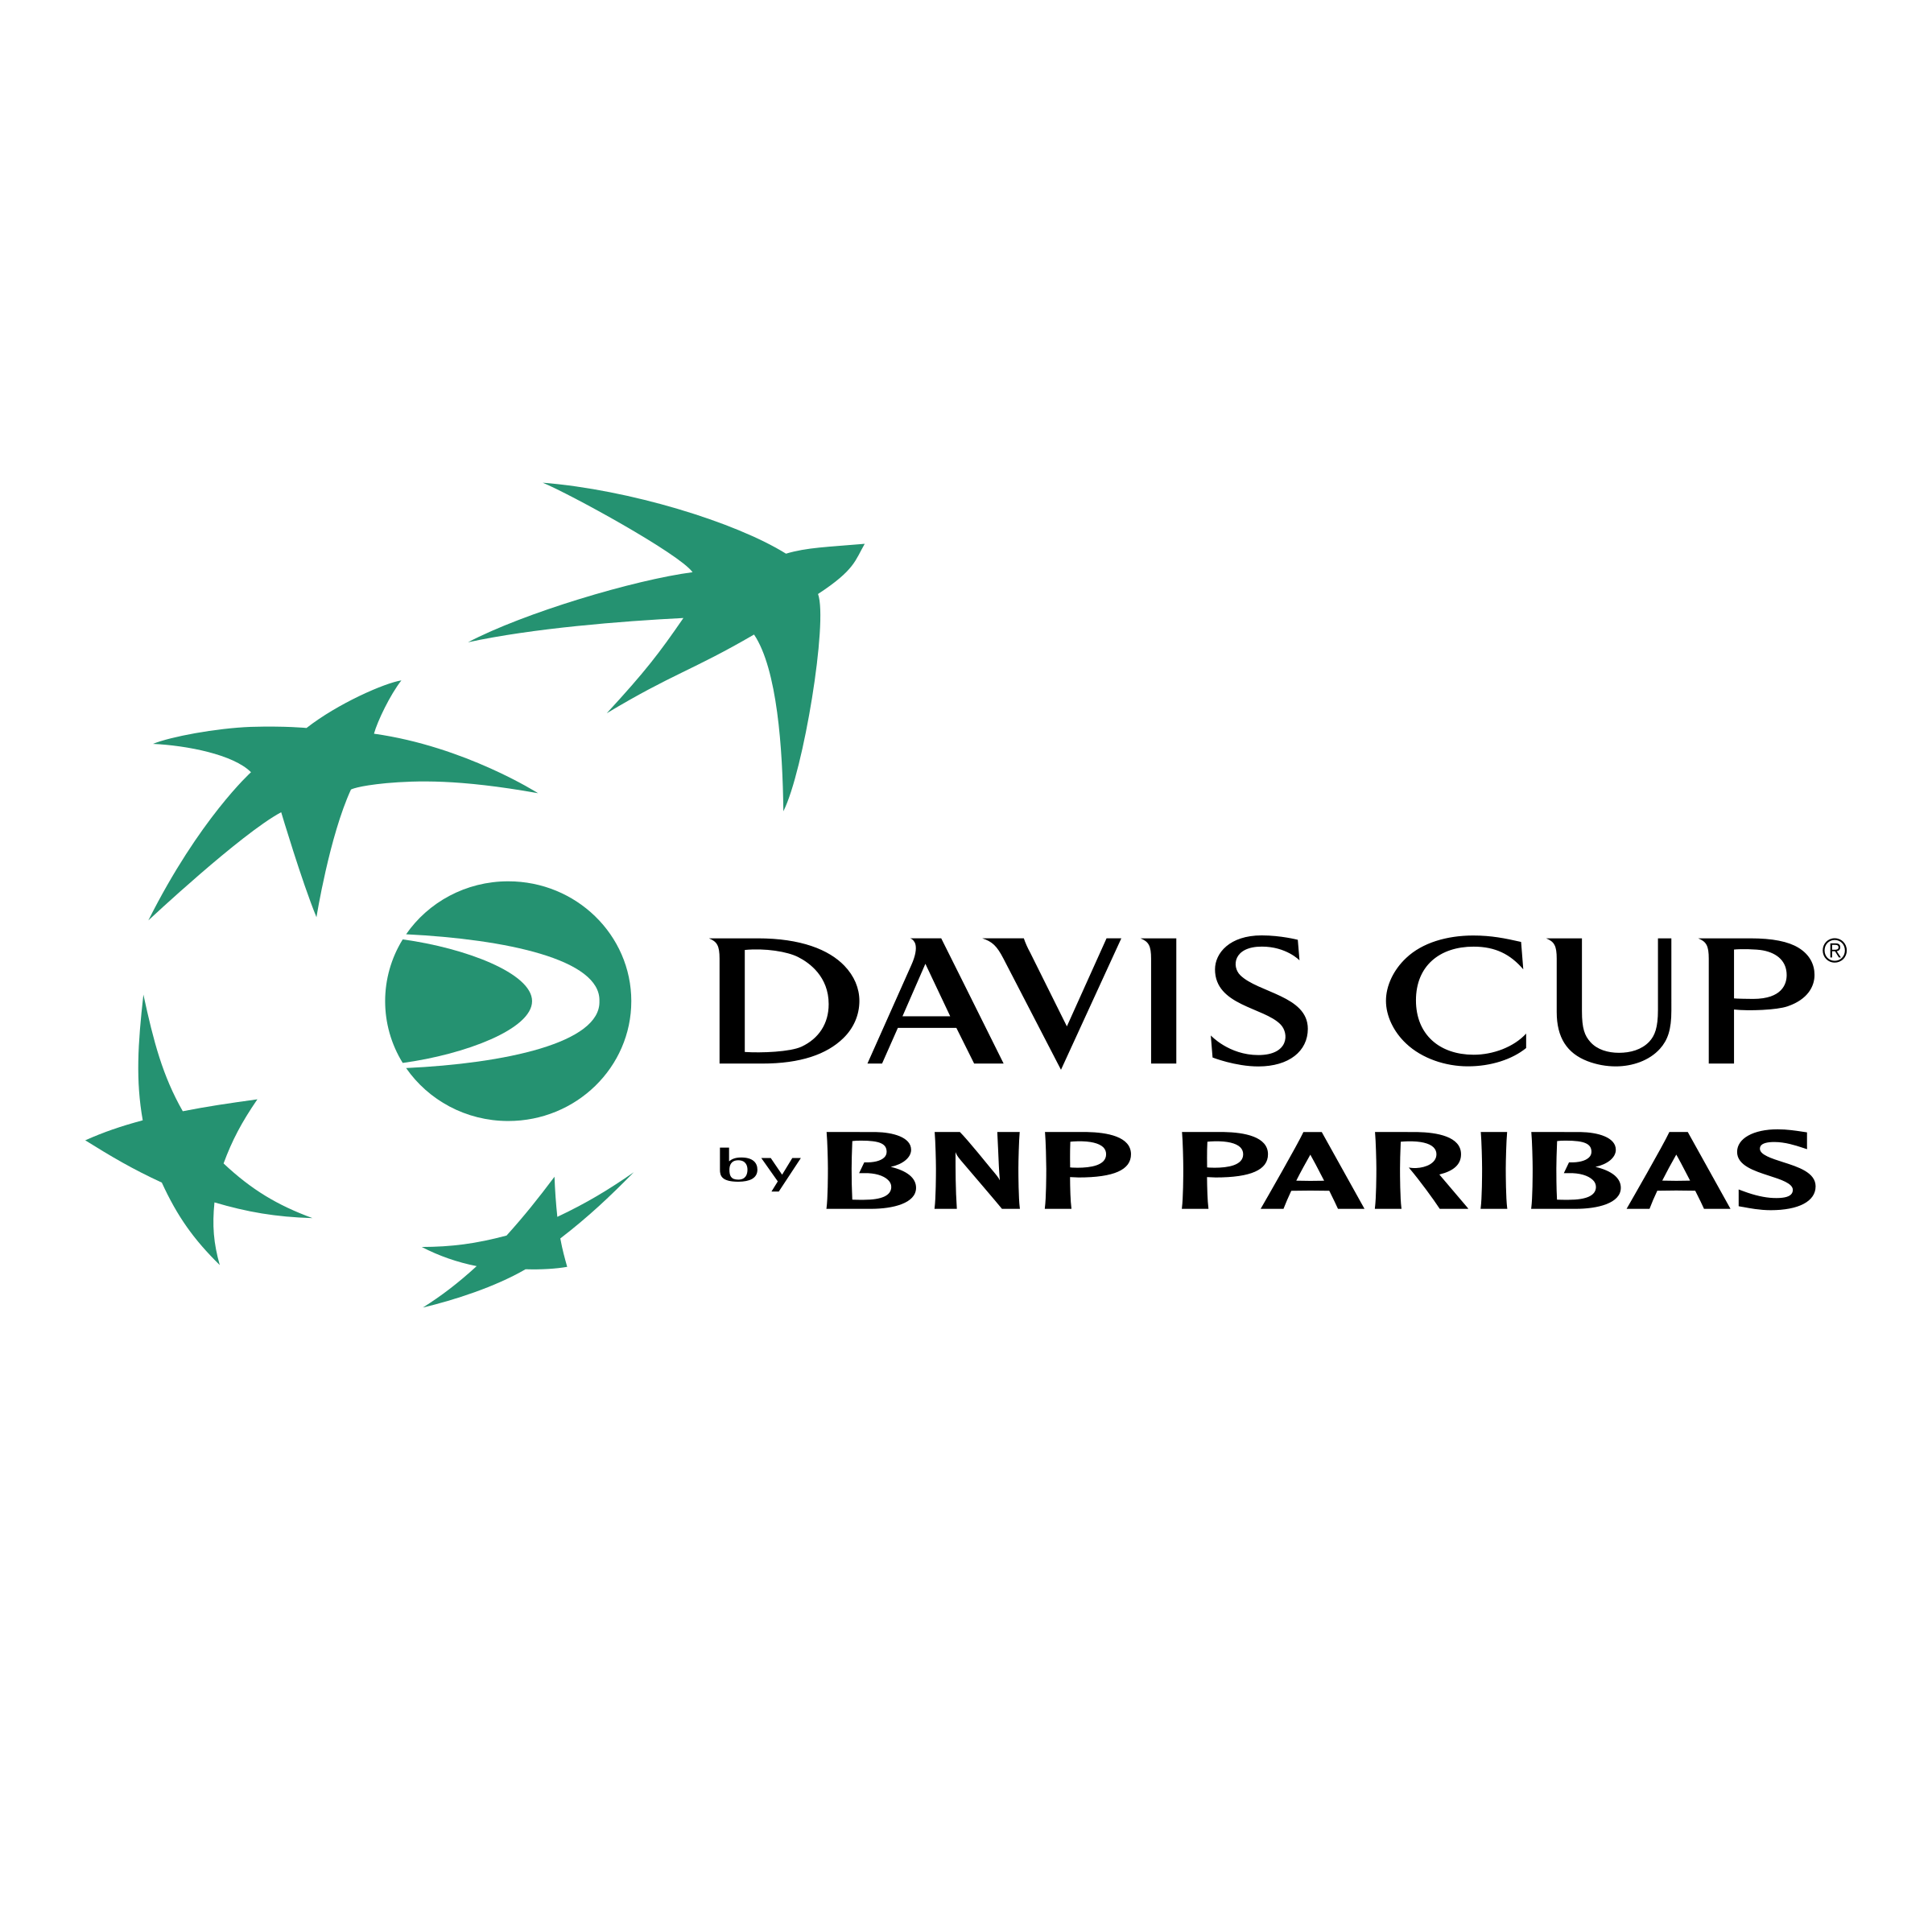 BNP Paribas Logo - Davis Cup by BNP Paribas Logo PNG Transparent & SVG Vector - Freebie ...